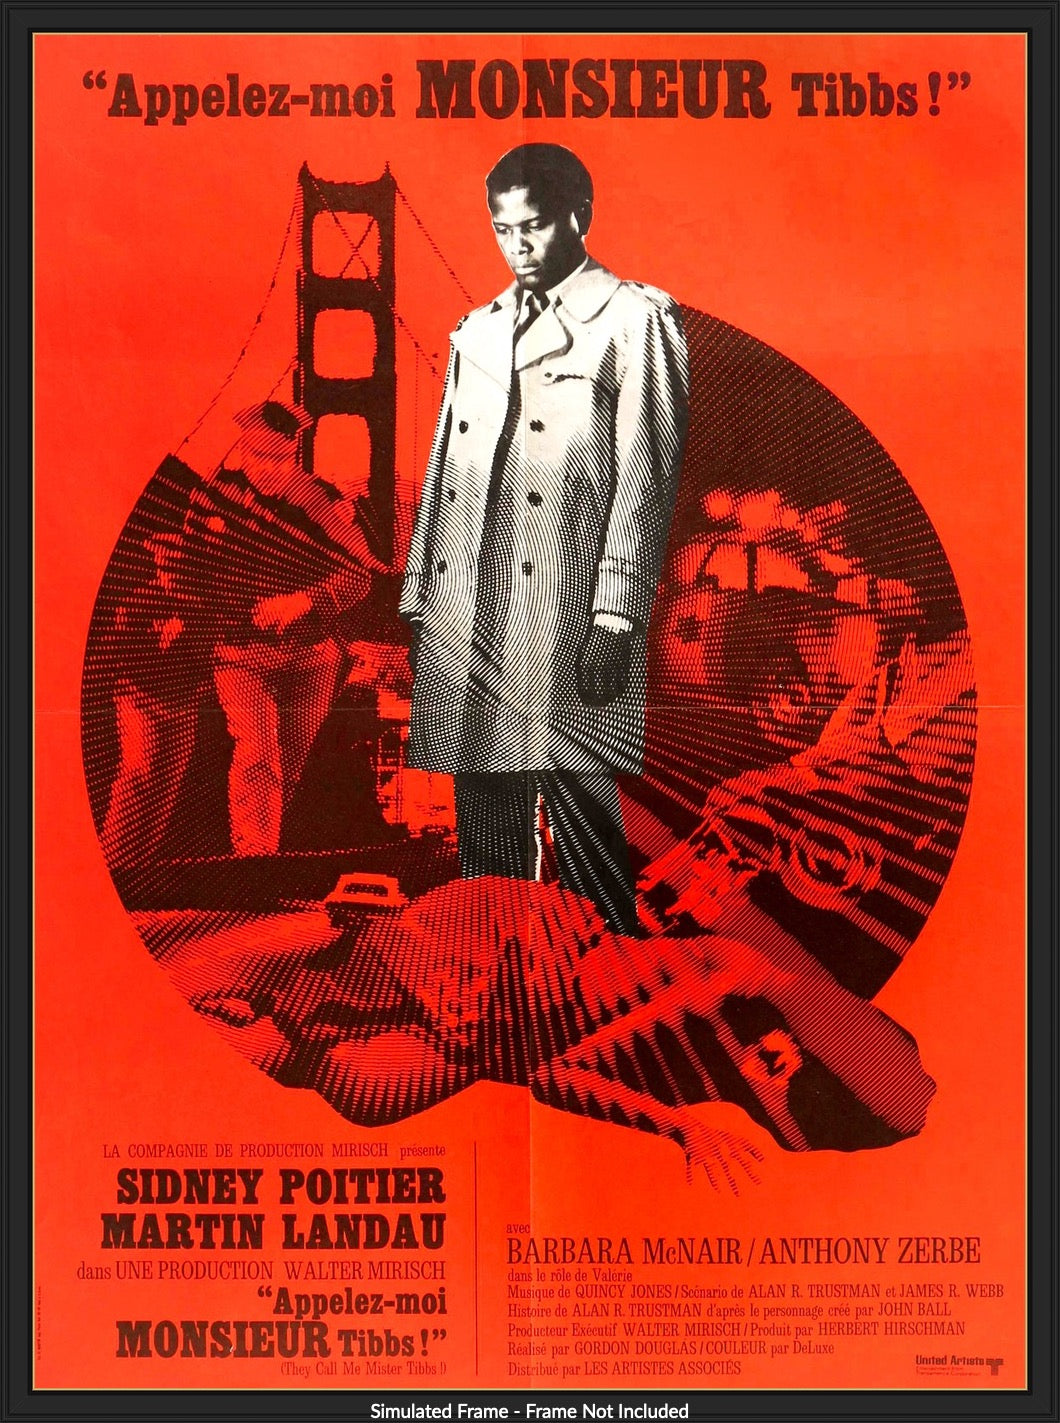 They Call Me Mister Tibbs! (1970) original movie poster for sale at Original Film Art